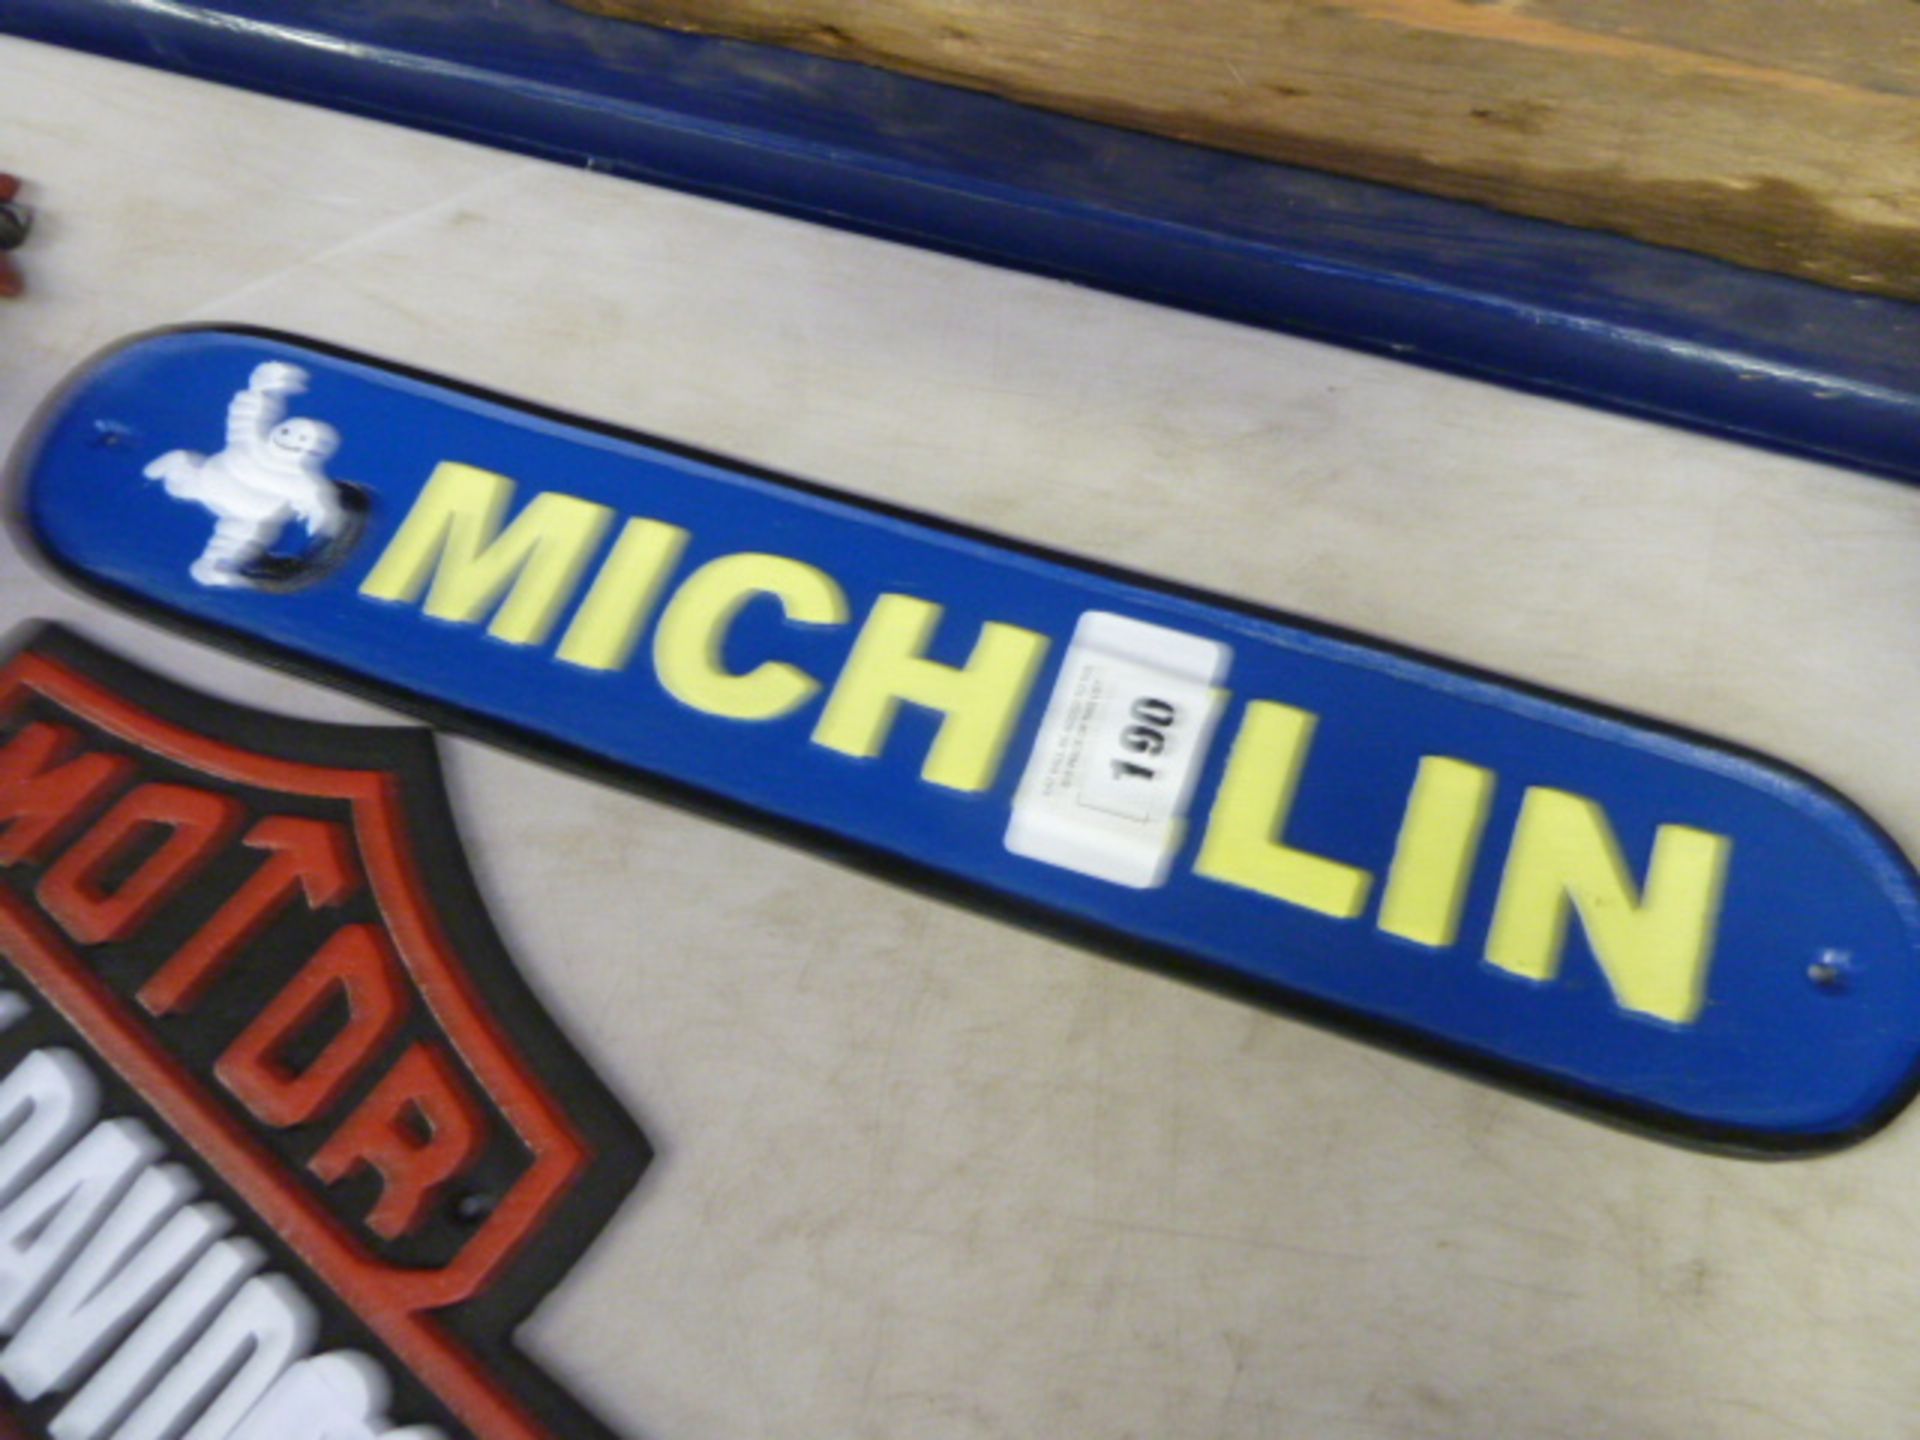 Michelin cast sign (115)